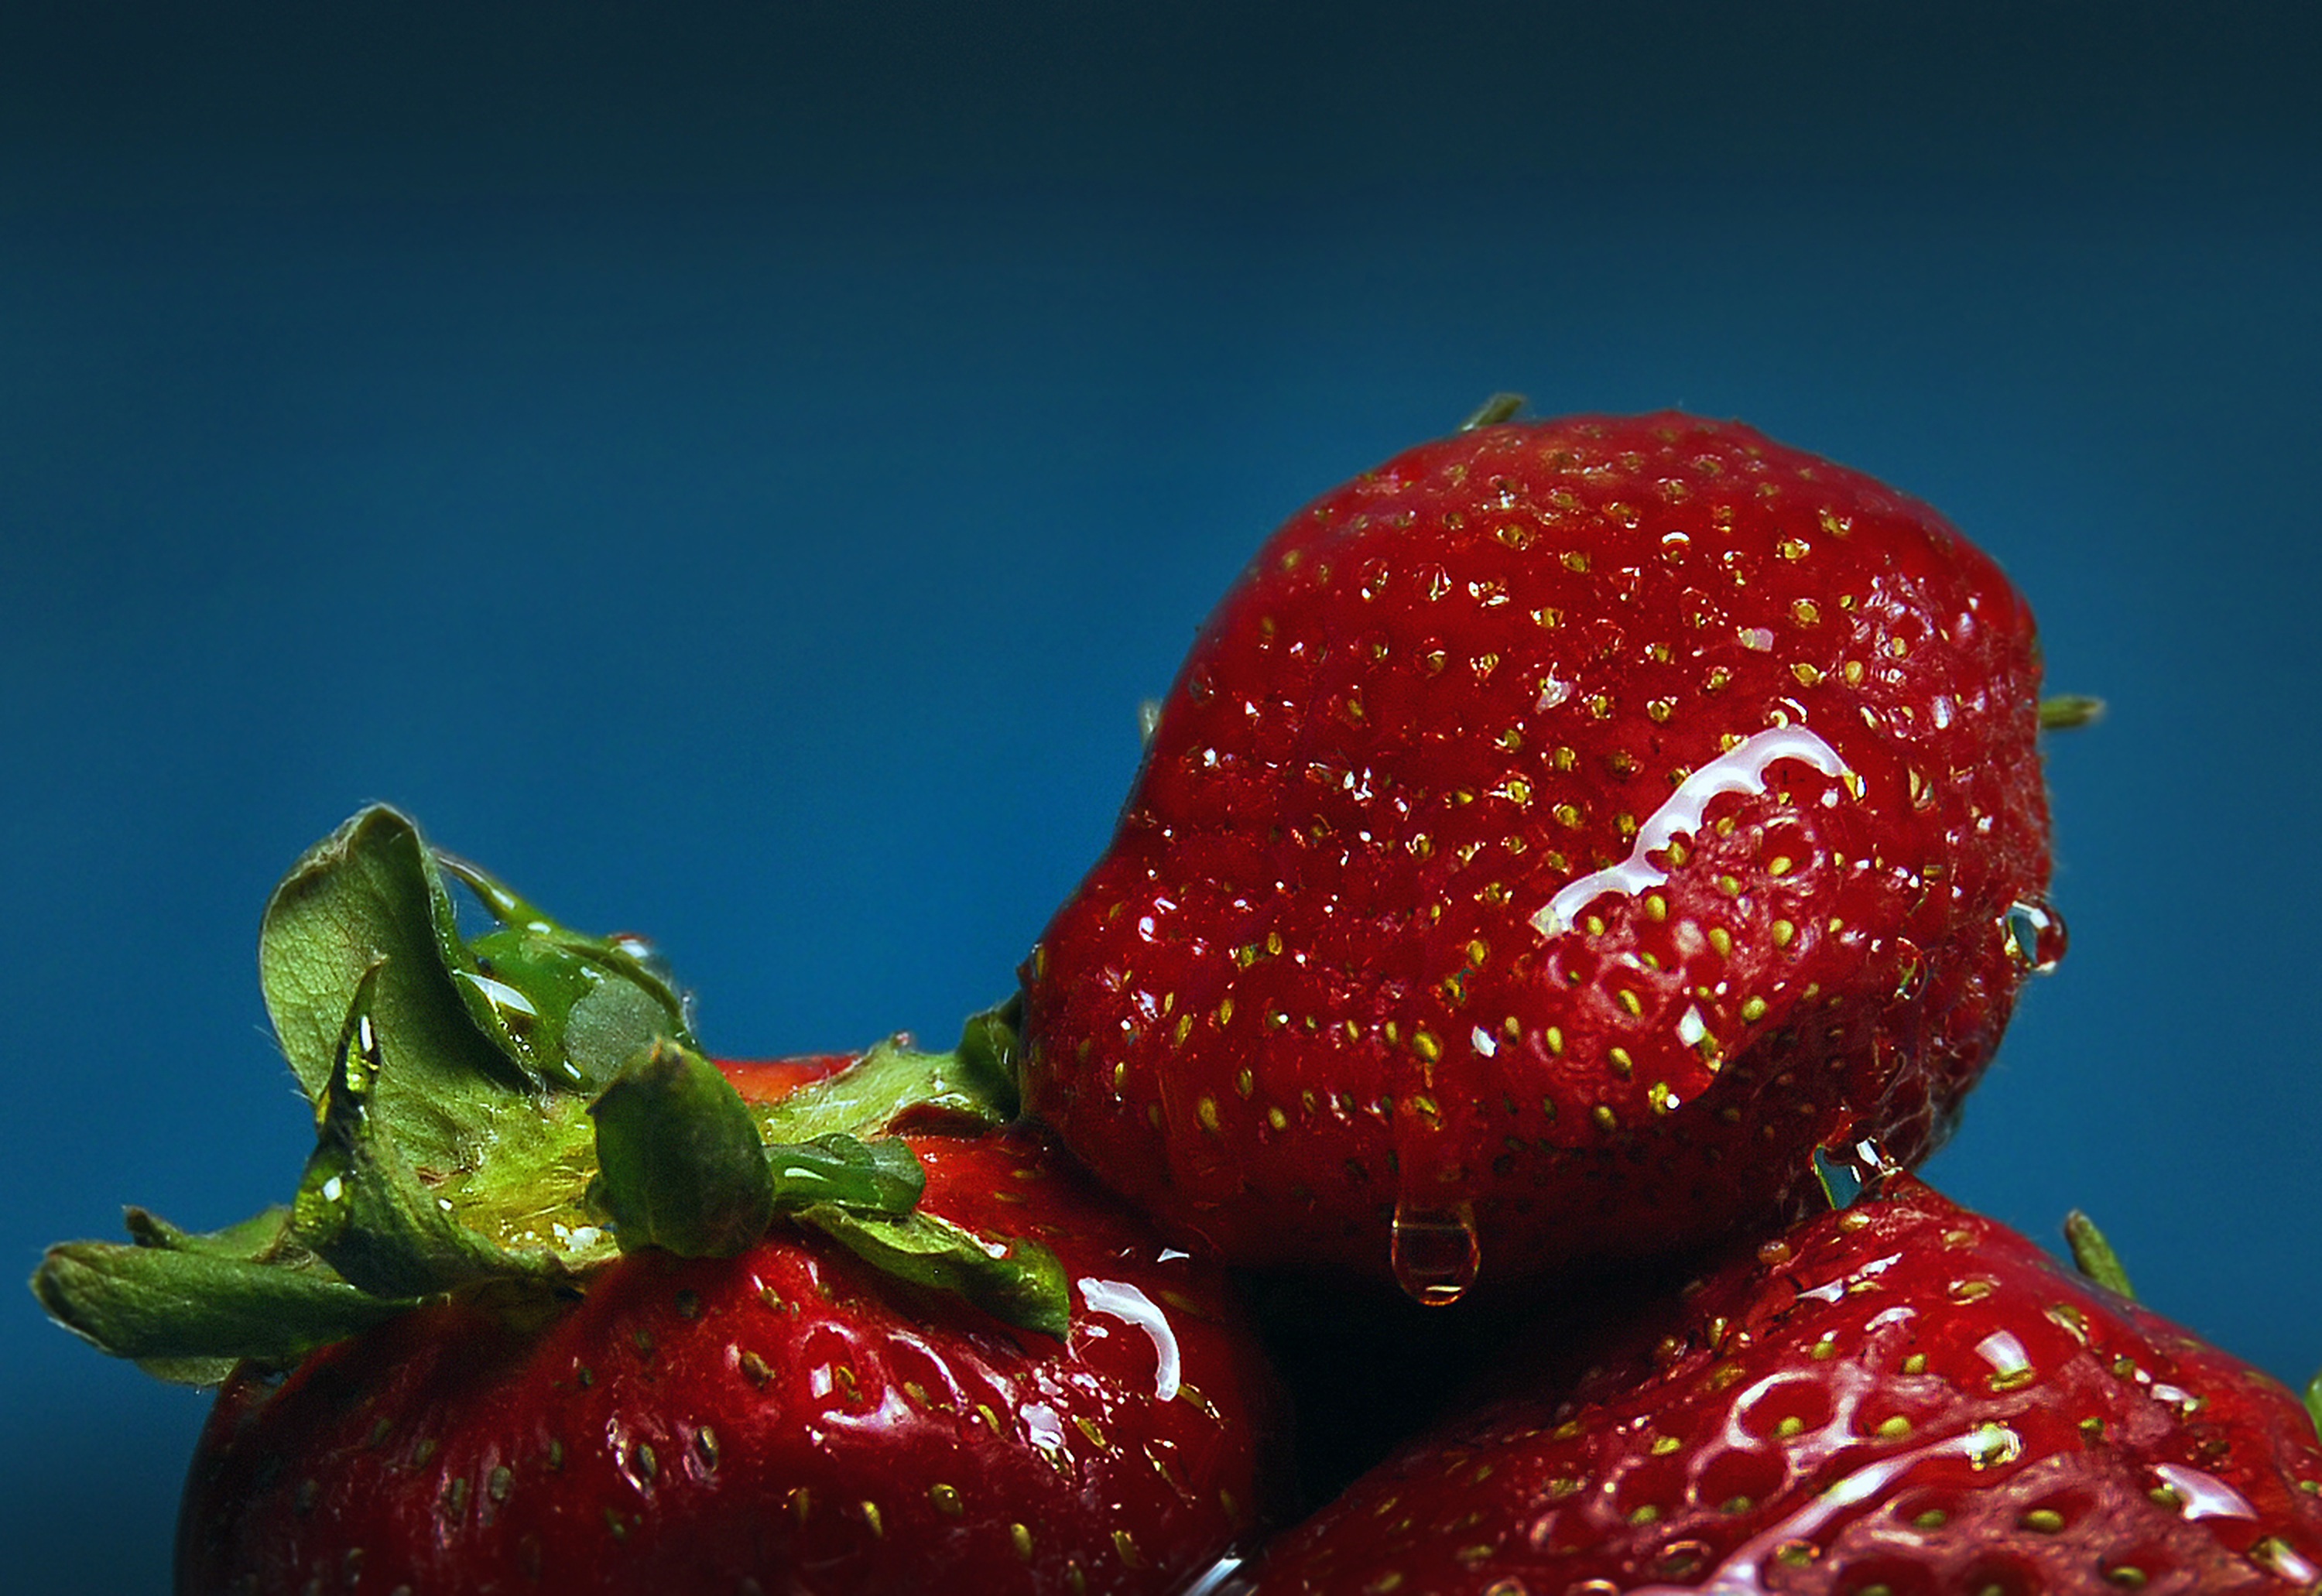 60417 Hintergrundbild herunterladen erdbeere, berries, makro, reif, saftig - Bildschirmschoner und Bilder kostenlos